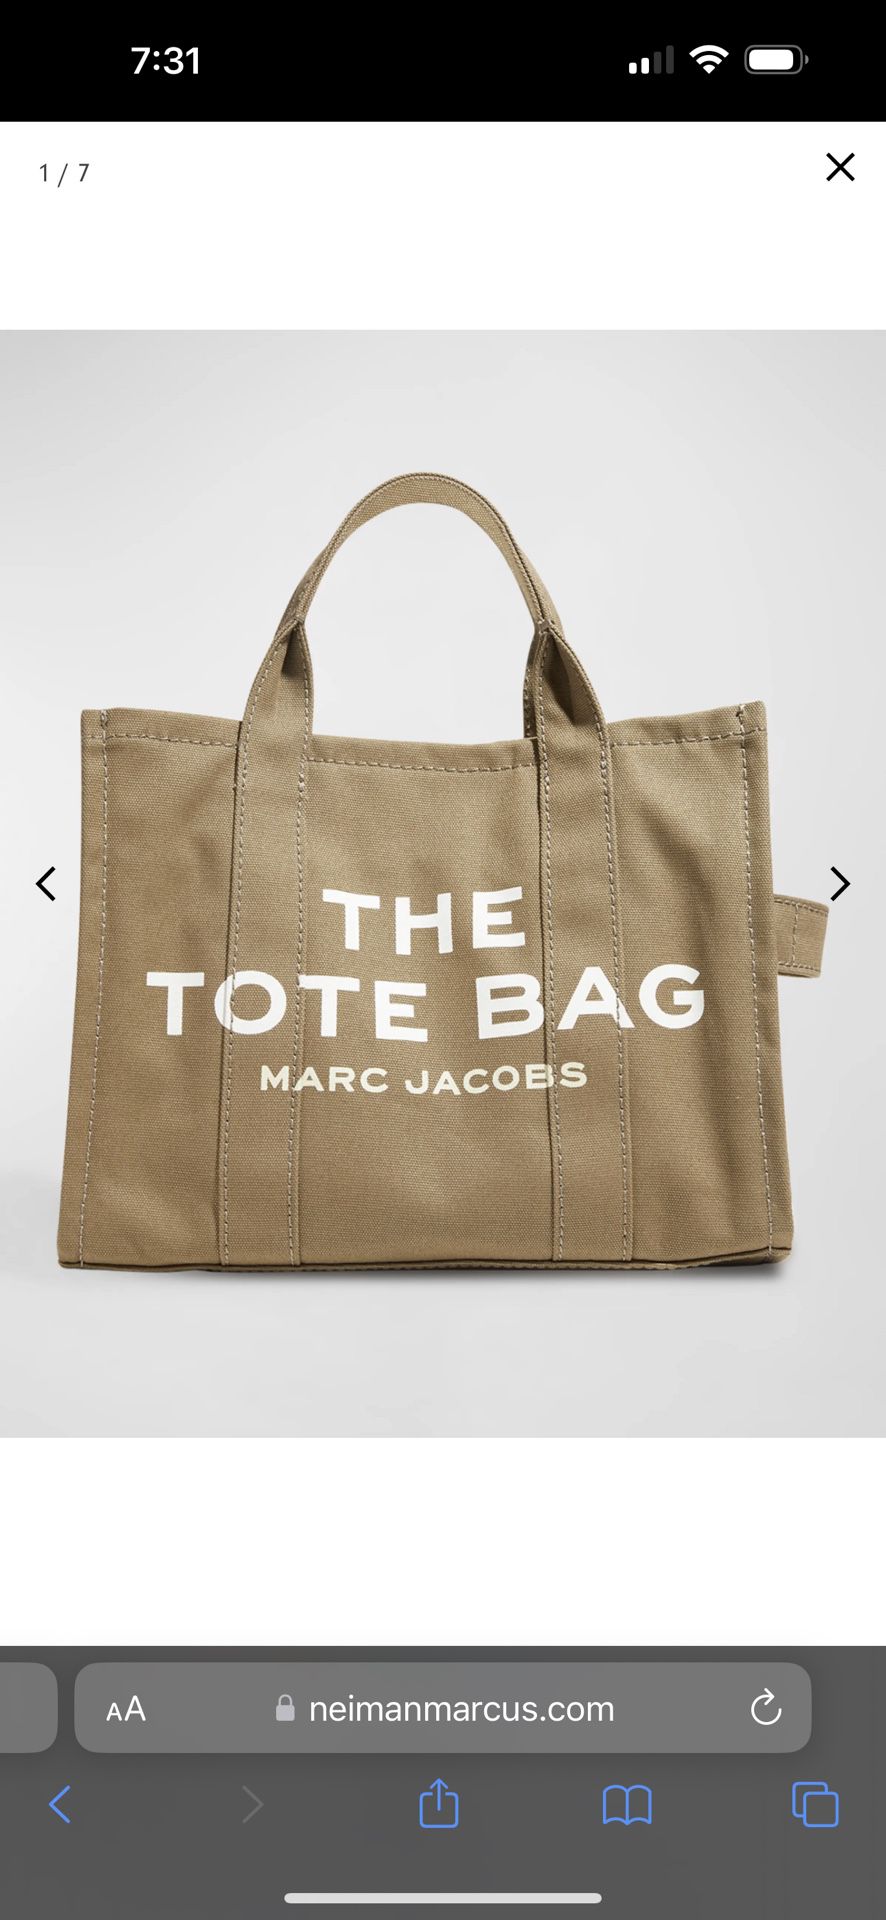 Marc Jacobs Green Medium The Tote Bag